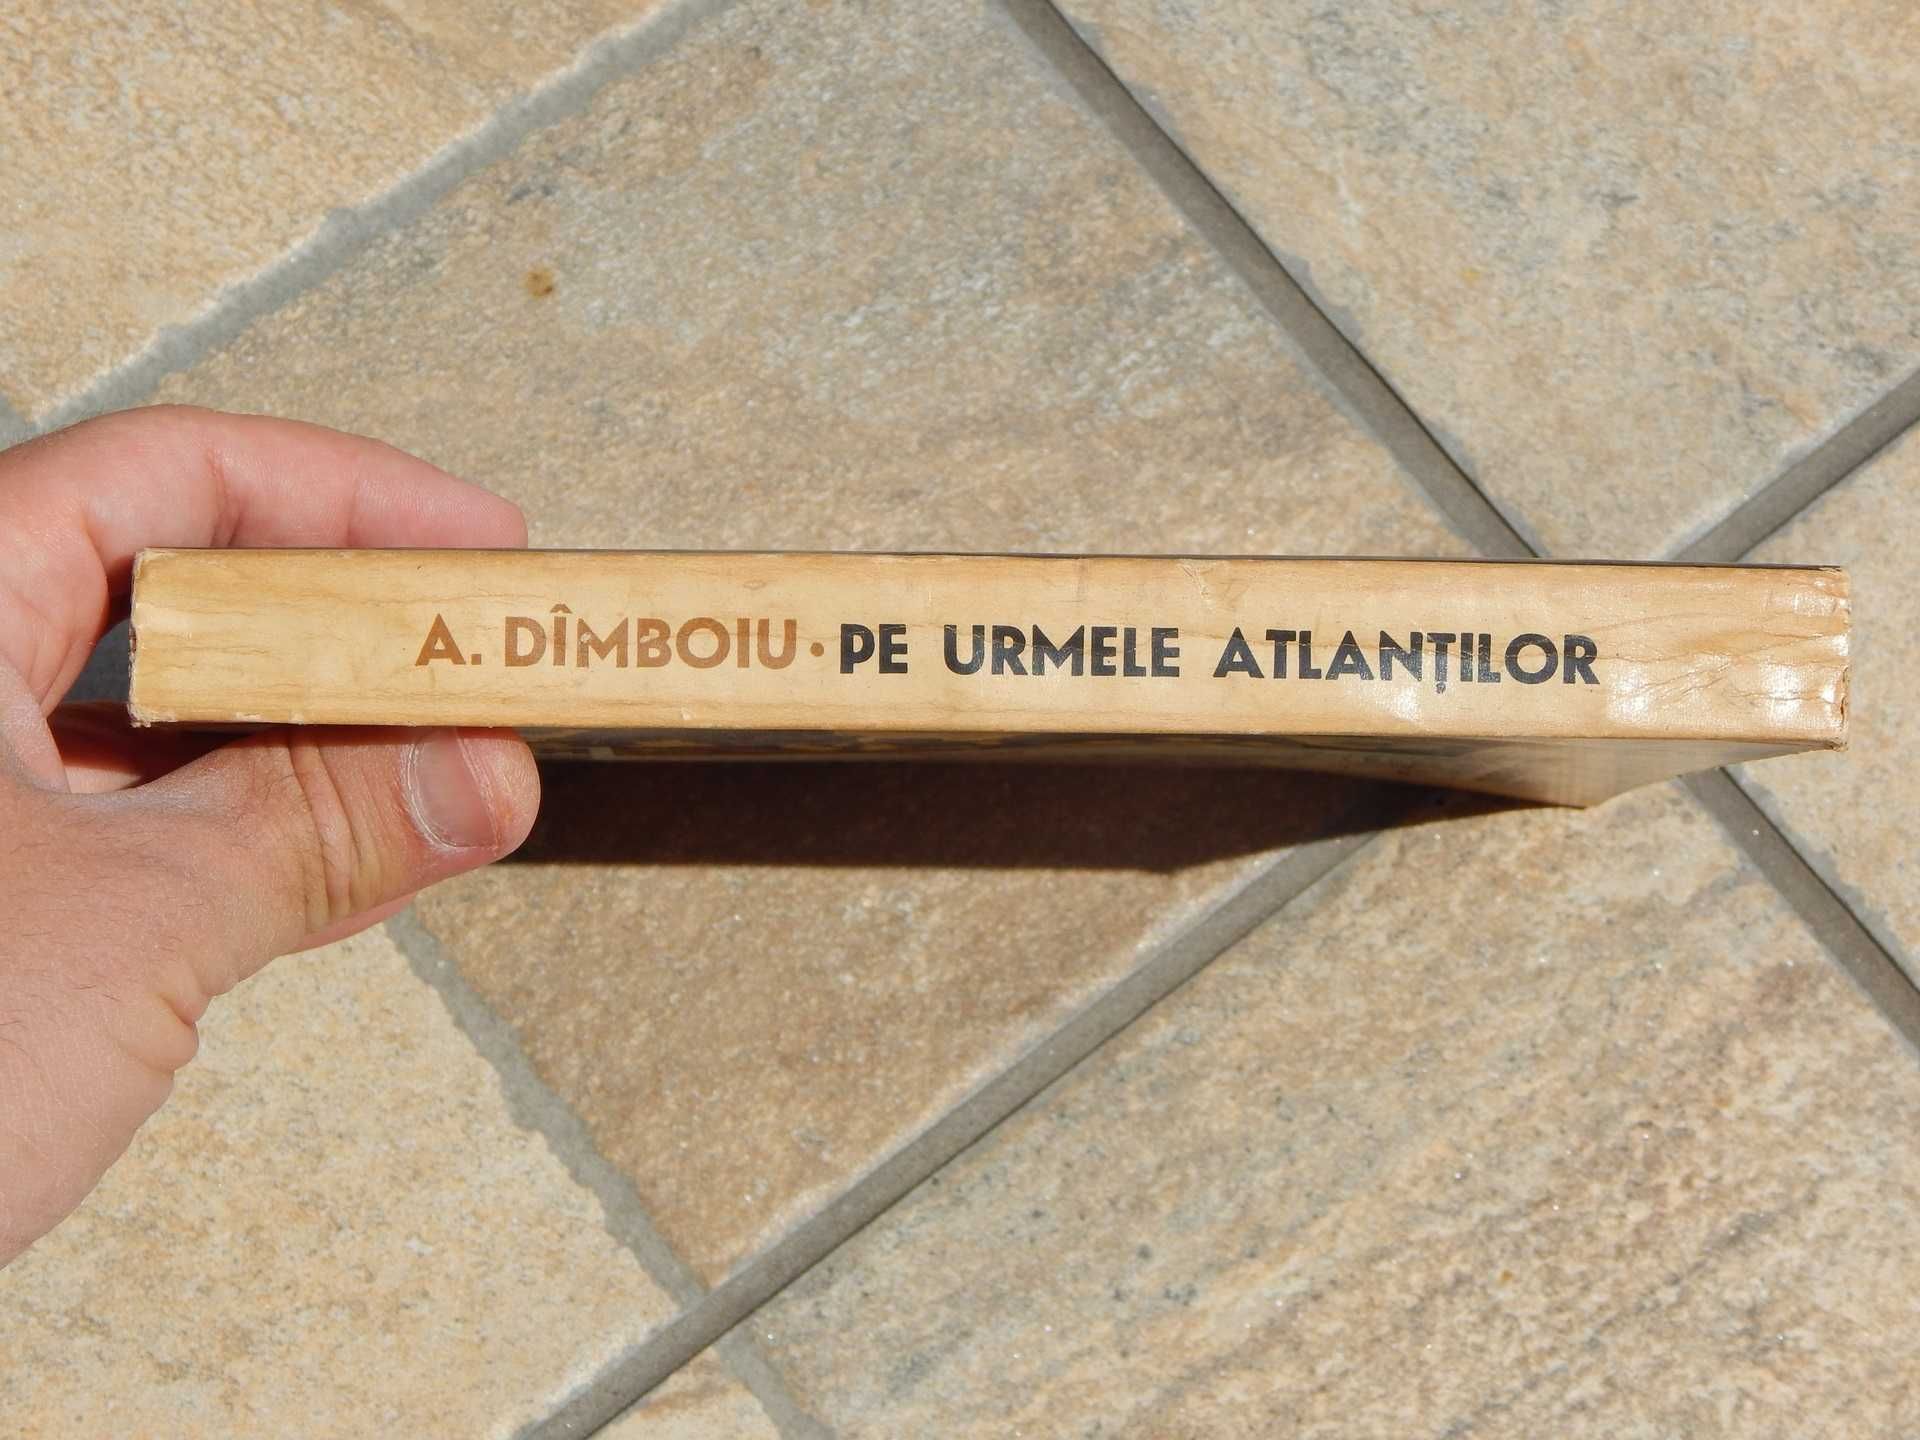 Pe urmele atlantilor (Atlantida) Aurel Dimboiu Edit Stiintifica 1963